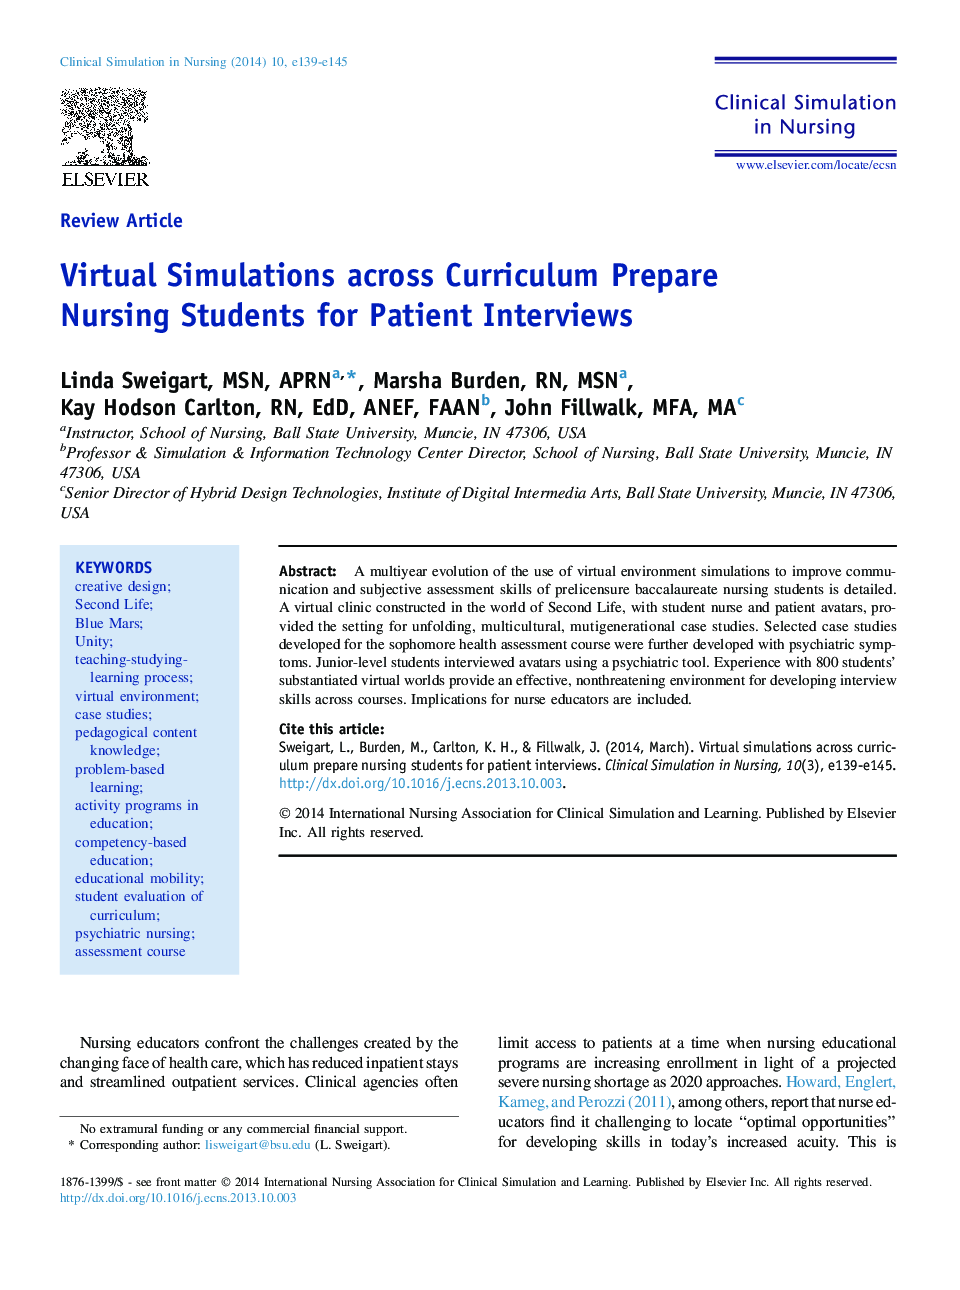 Virtual Simulations across Curriculum Prepare Nursing Students for Patient Interviews 